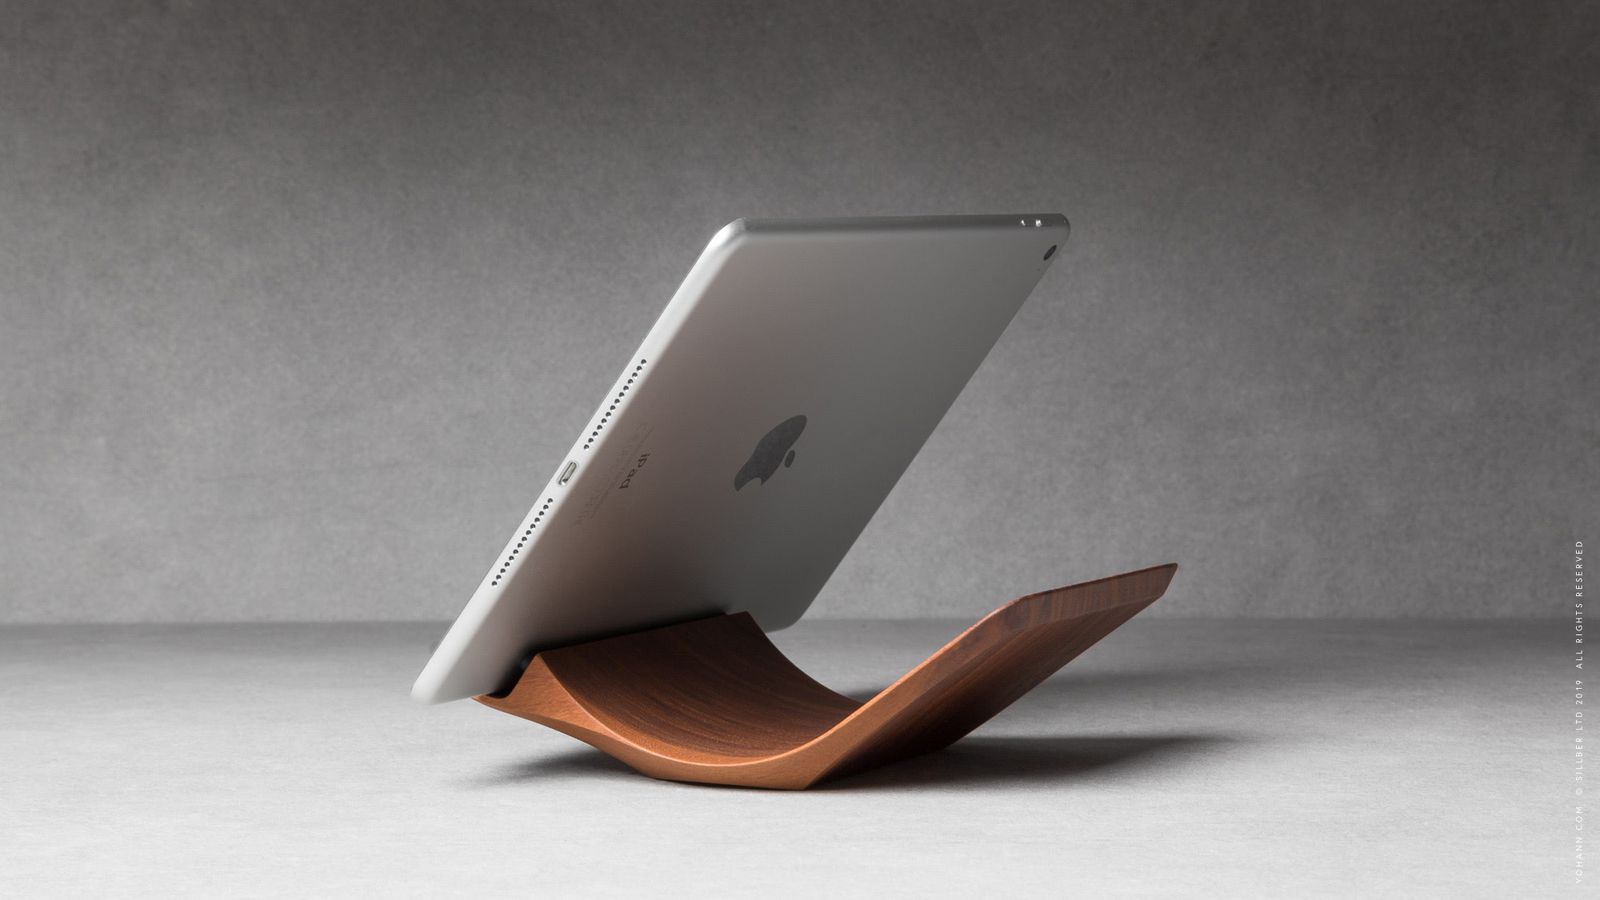 MacRumors Giveaway: Win an iPad or MacBook Stand From Yohann - MacRumors